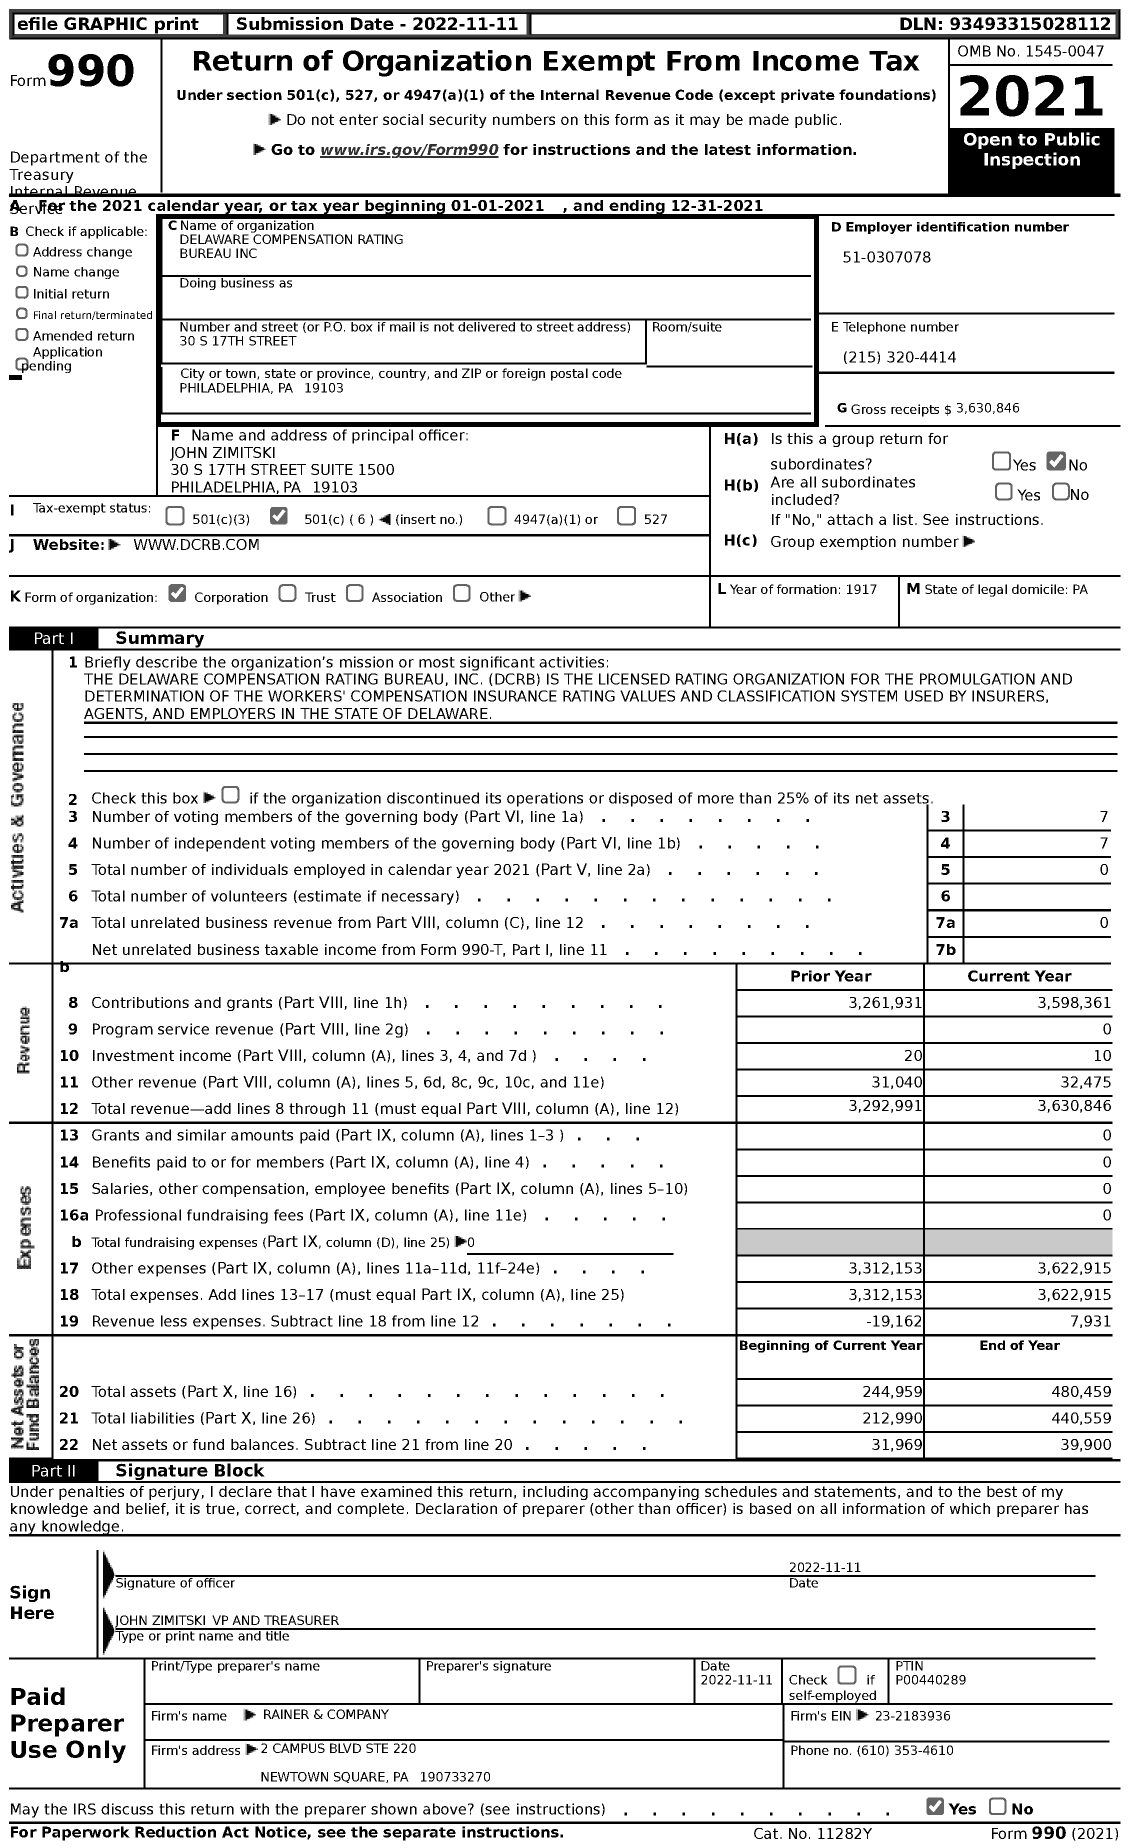 Image of first page of 2021 Form 990 for Delaware Compensation Rating Bureau (DCRB)